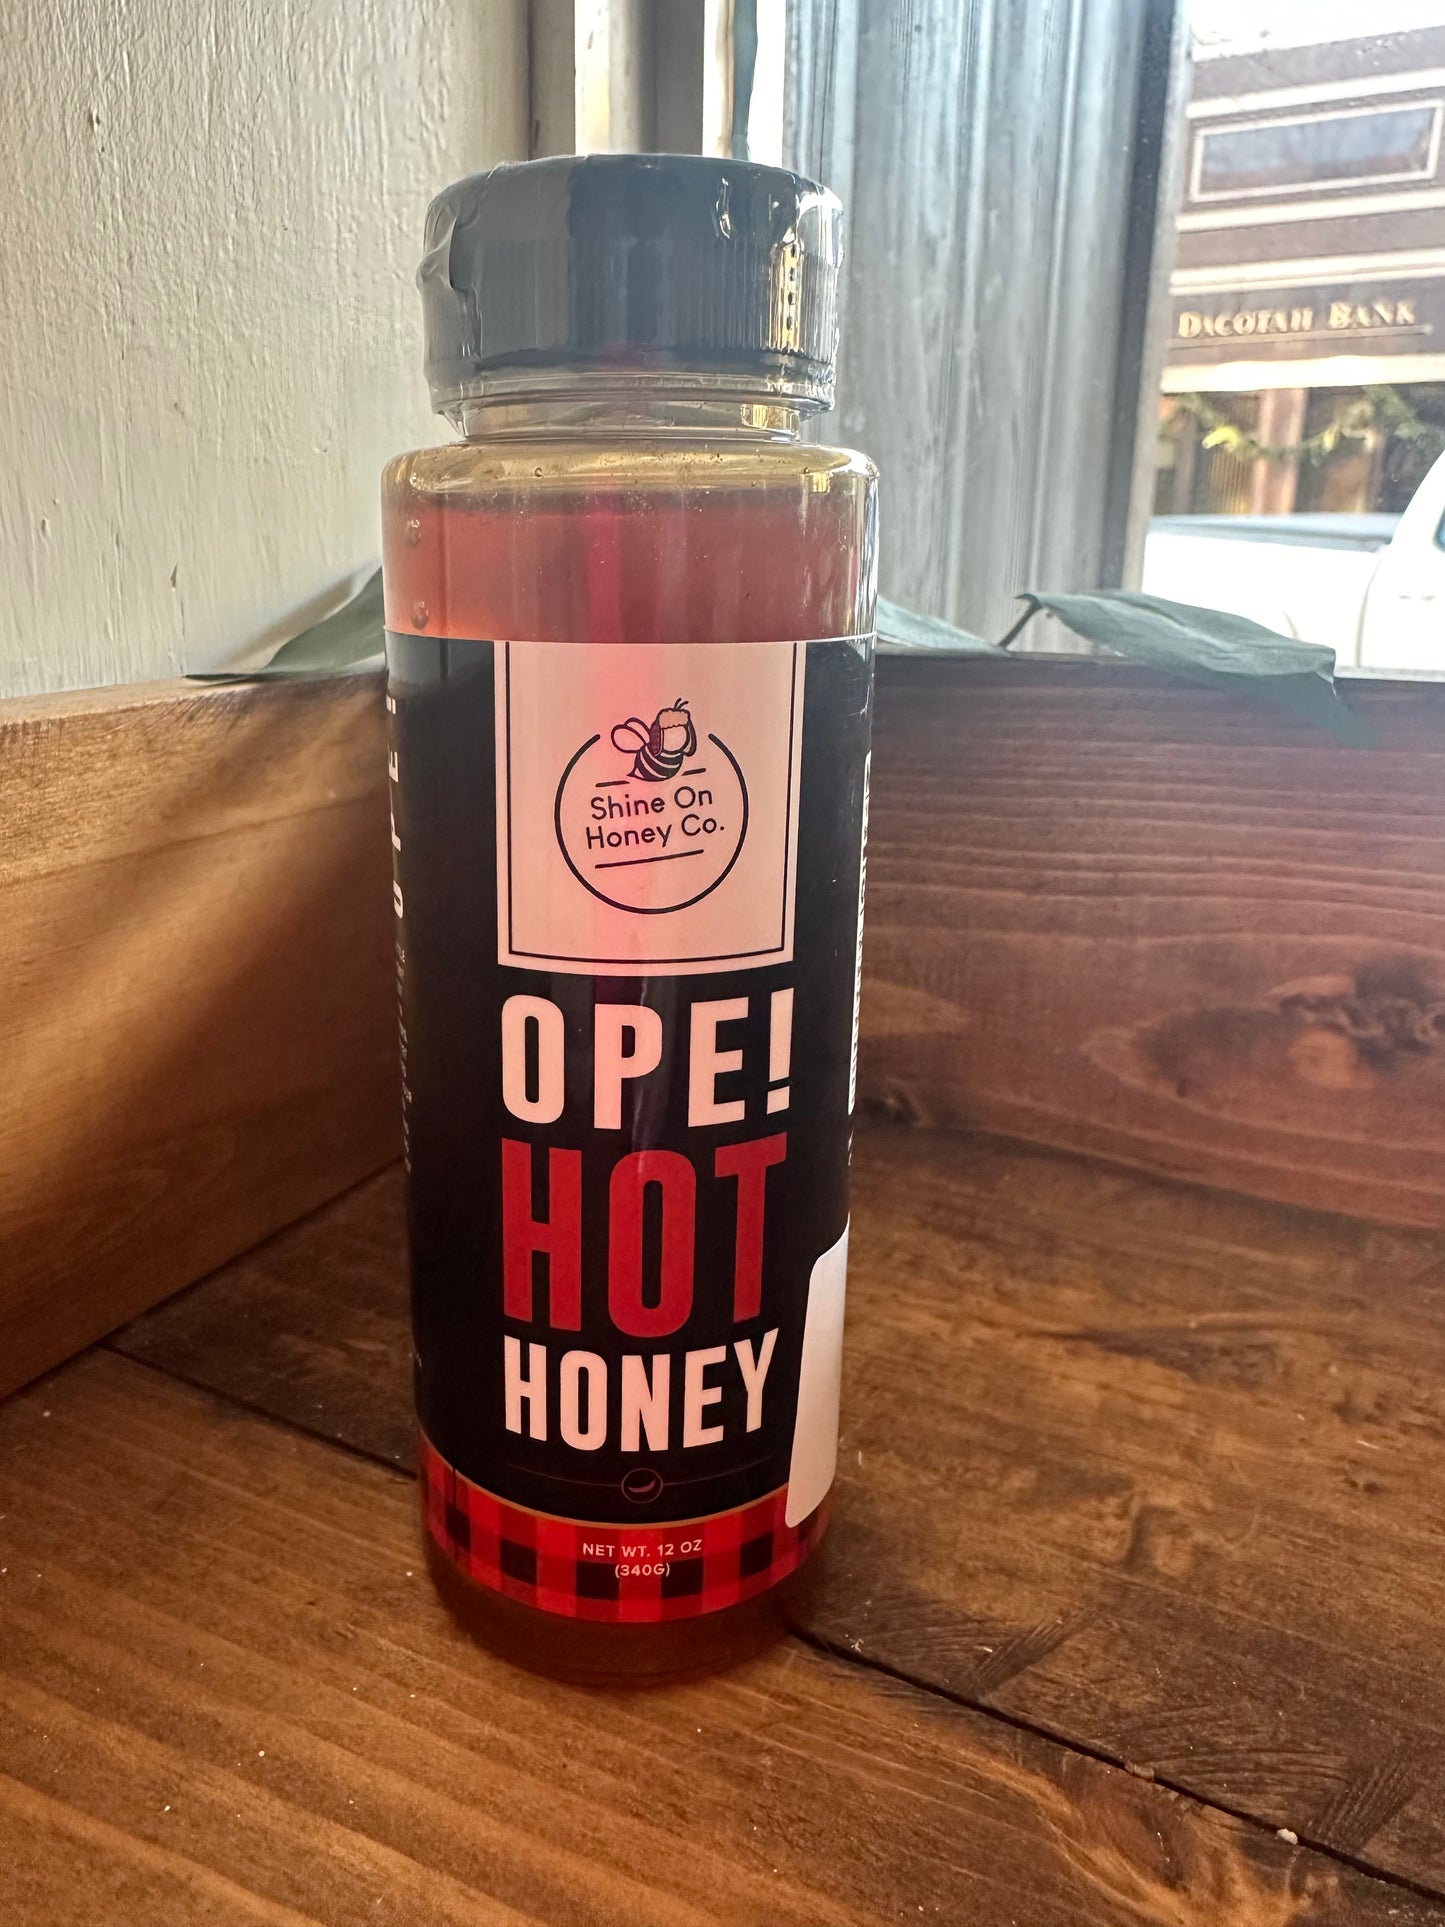 Ope! Hot Honey